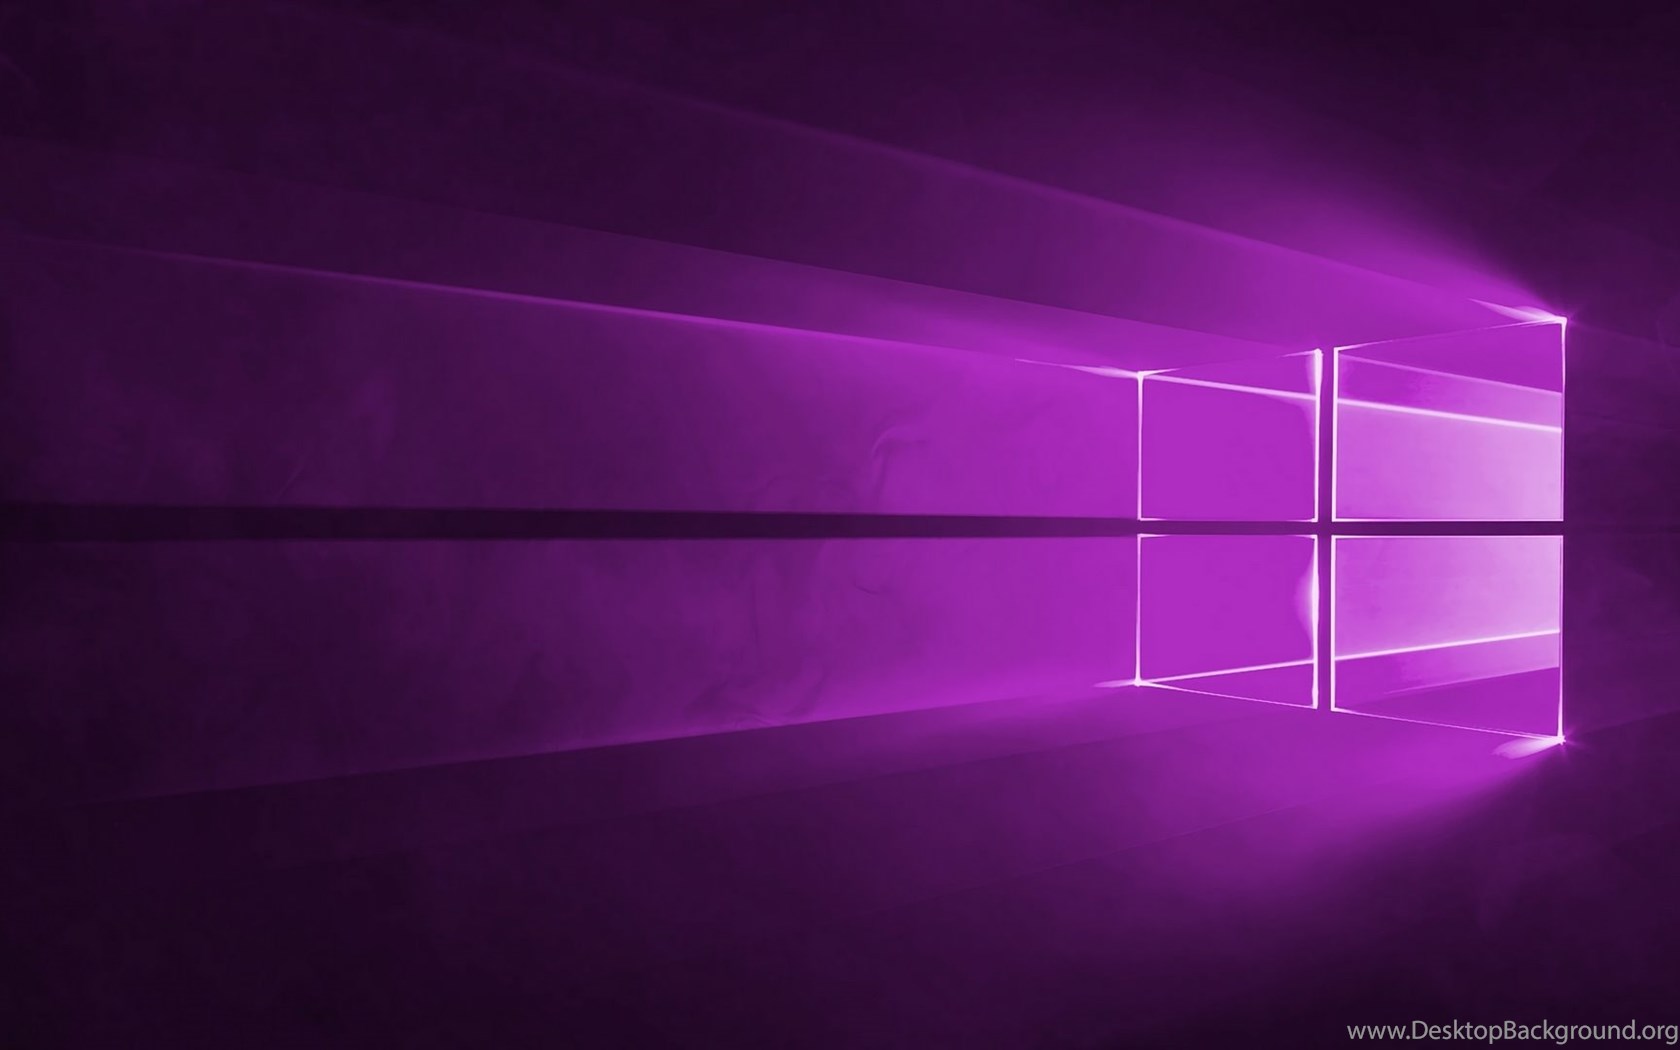 Windows 10 Wallpapers Violet Theme 1920x1080 4527 Desktop